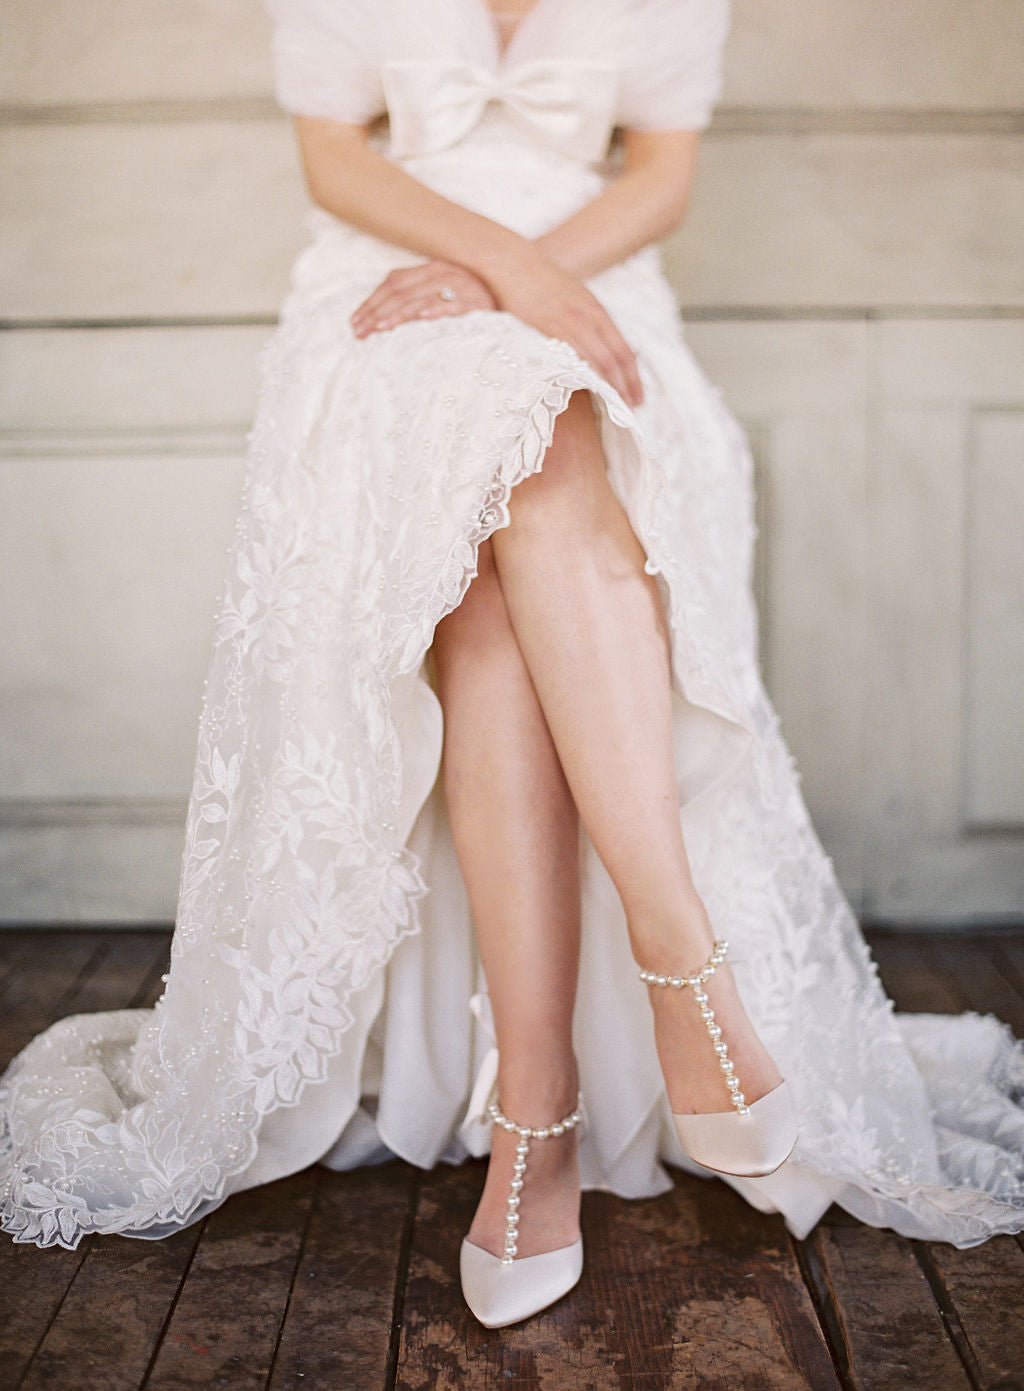 bridal shoes for lace dress